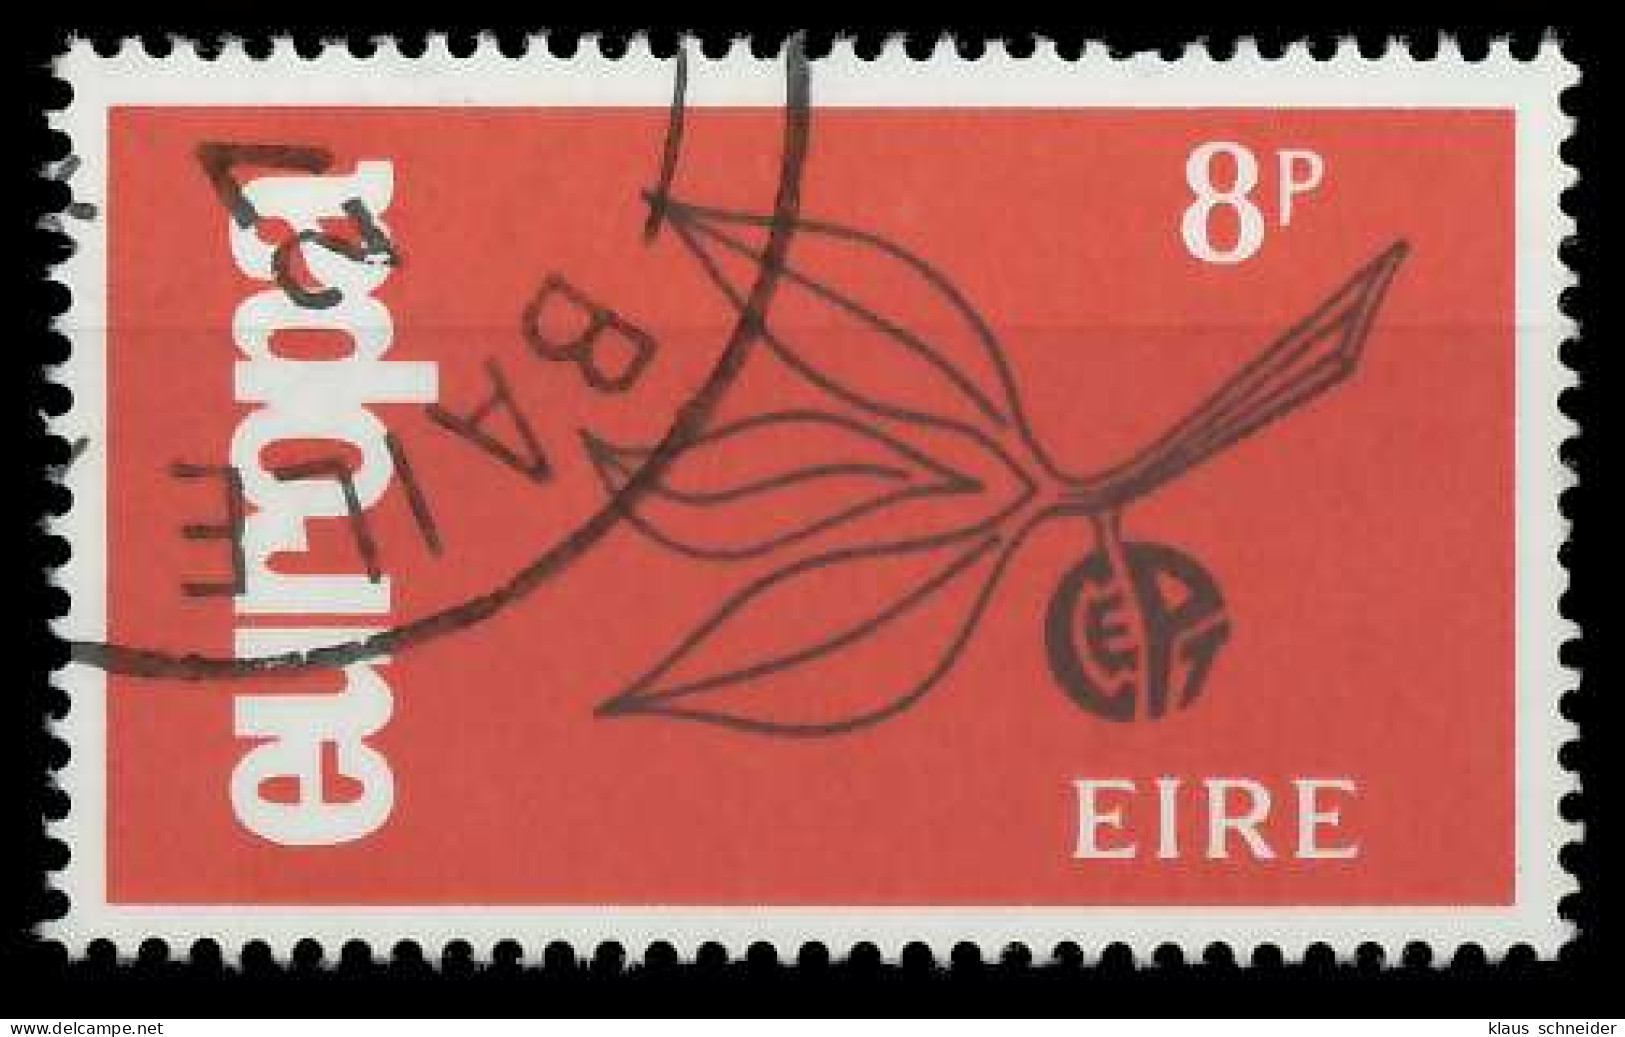 IRLAND 1965 Nr 176 Gestempelt X9B8E46 - Oblitérés